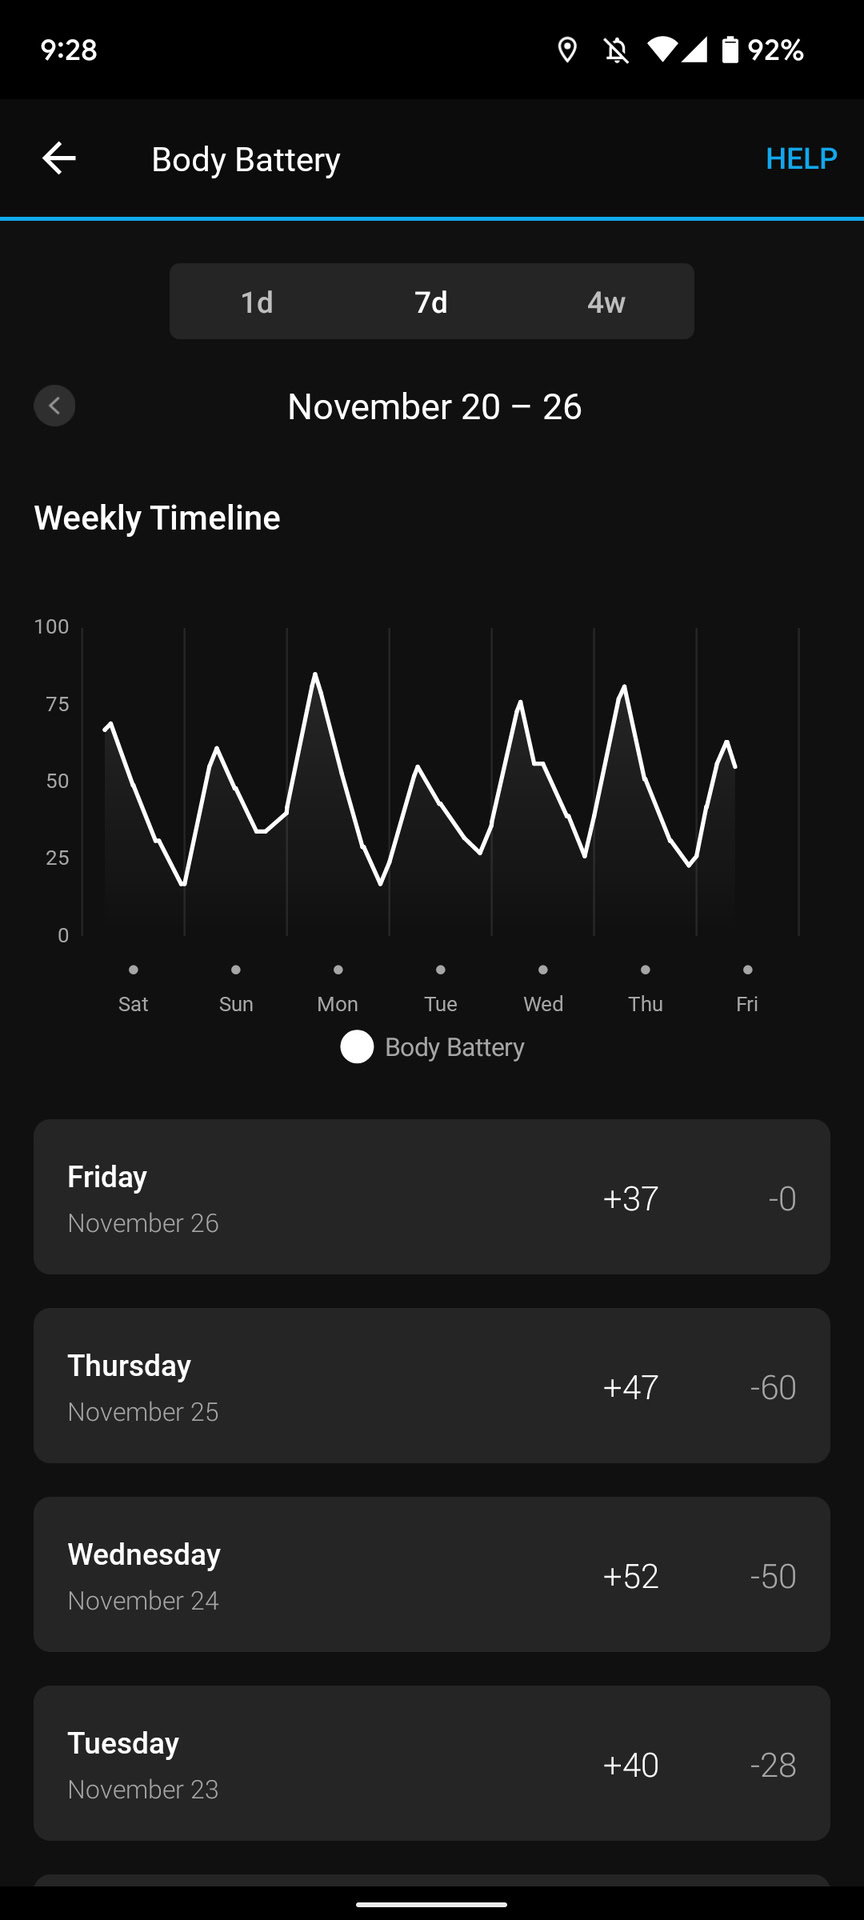 garmin body battery weekly timeline